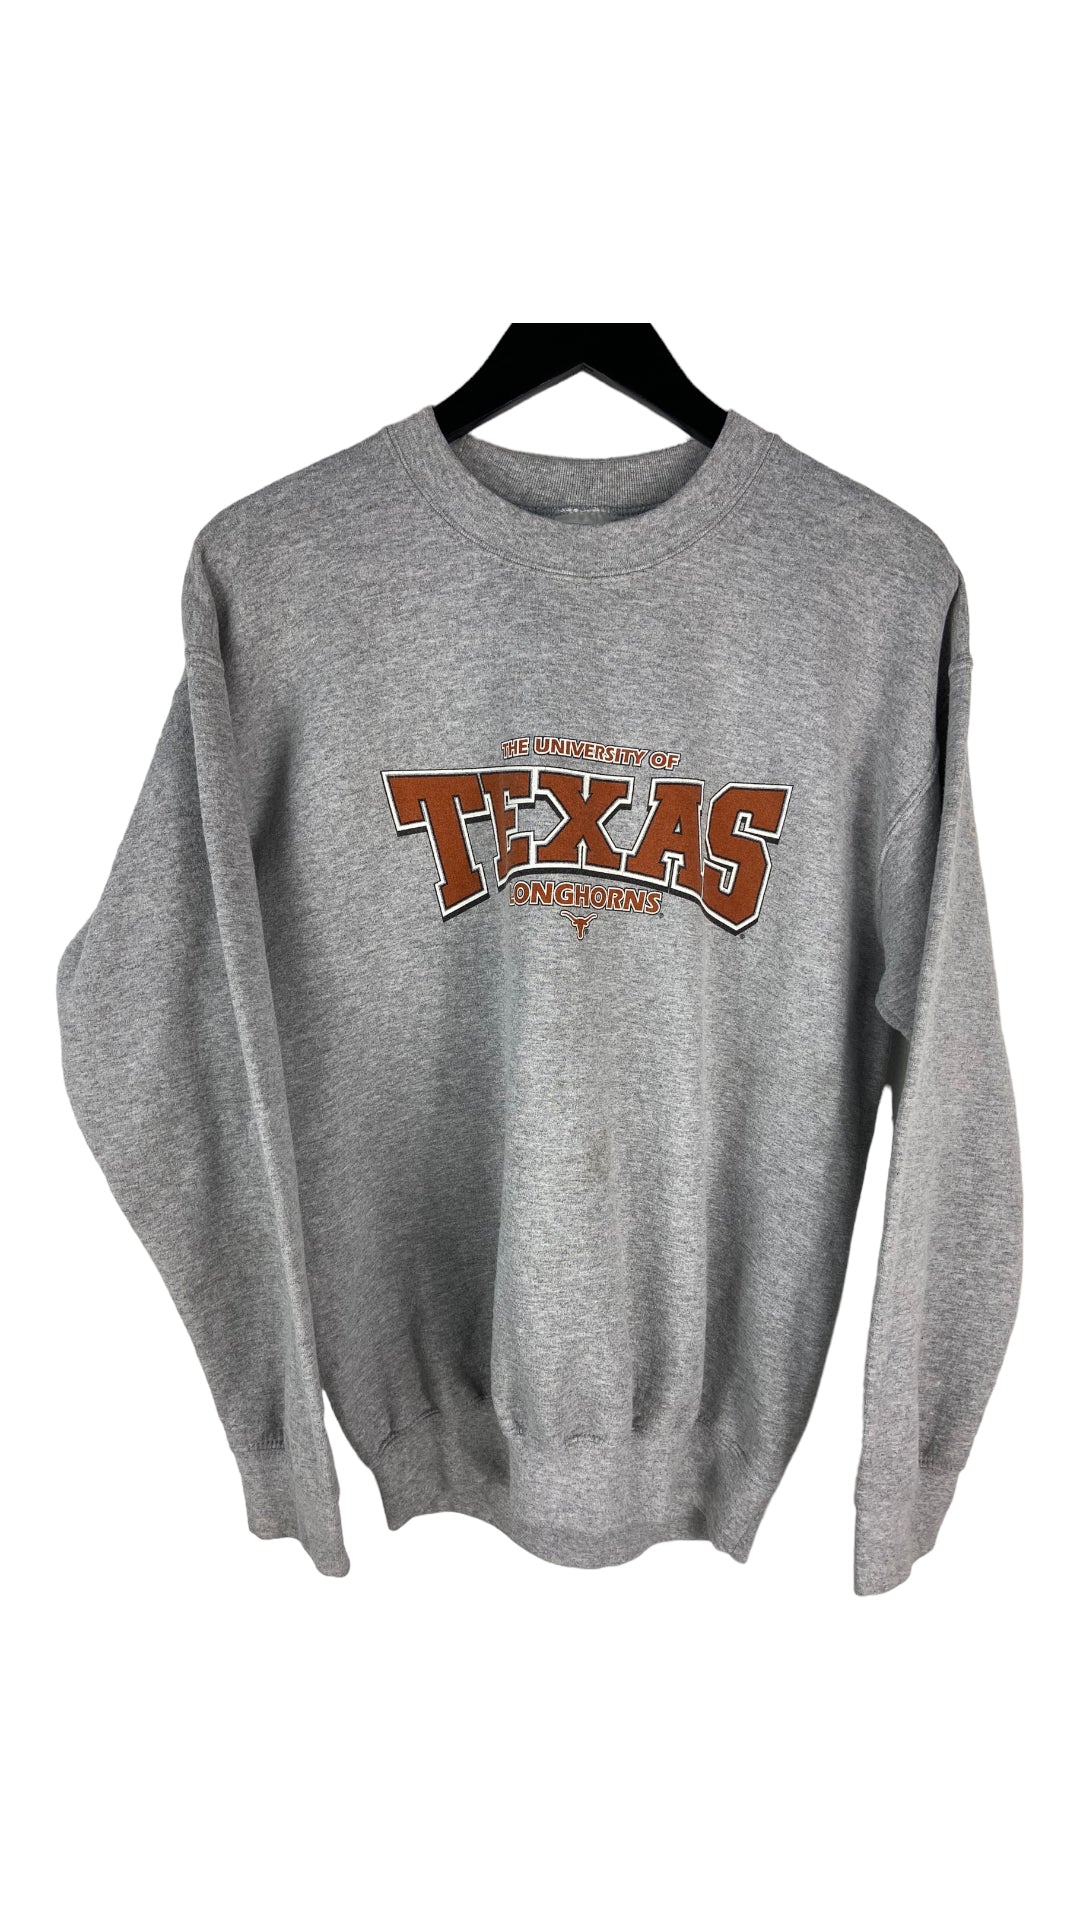 VTG University of Texas Longhorns Crewneck Sweater Sz M